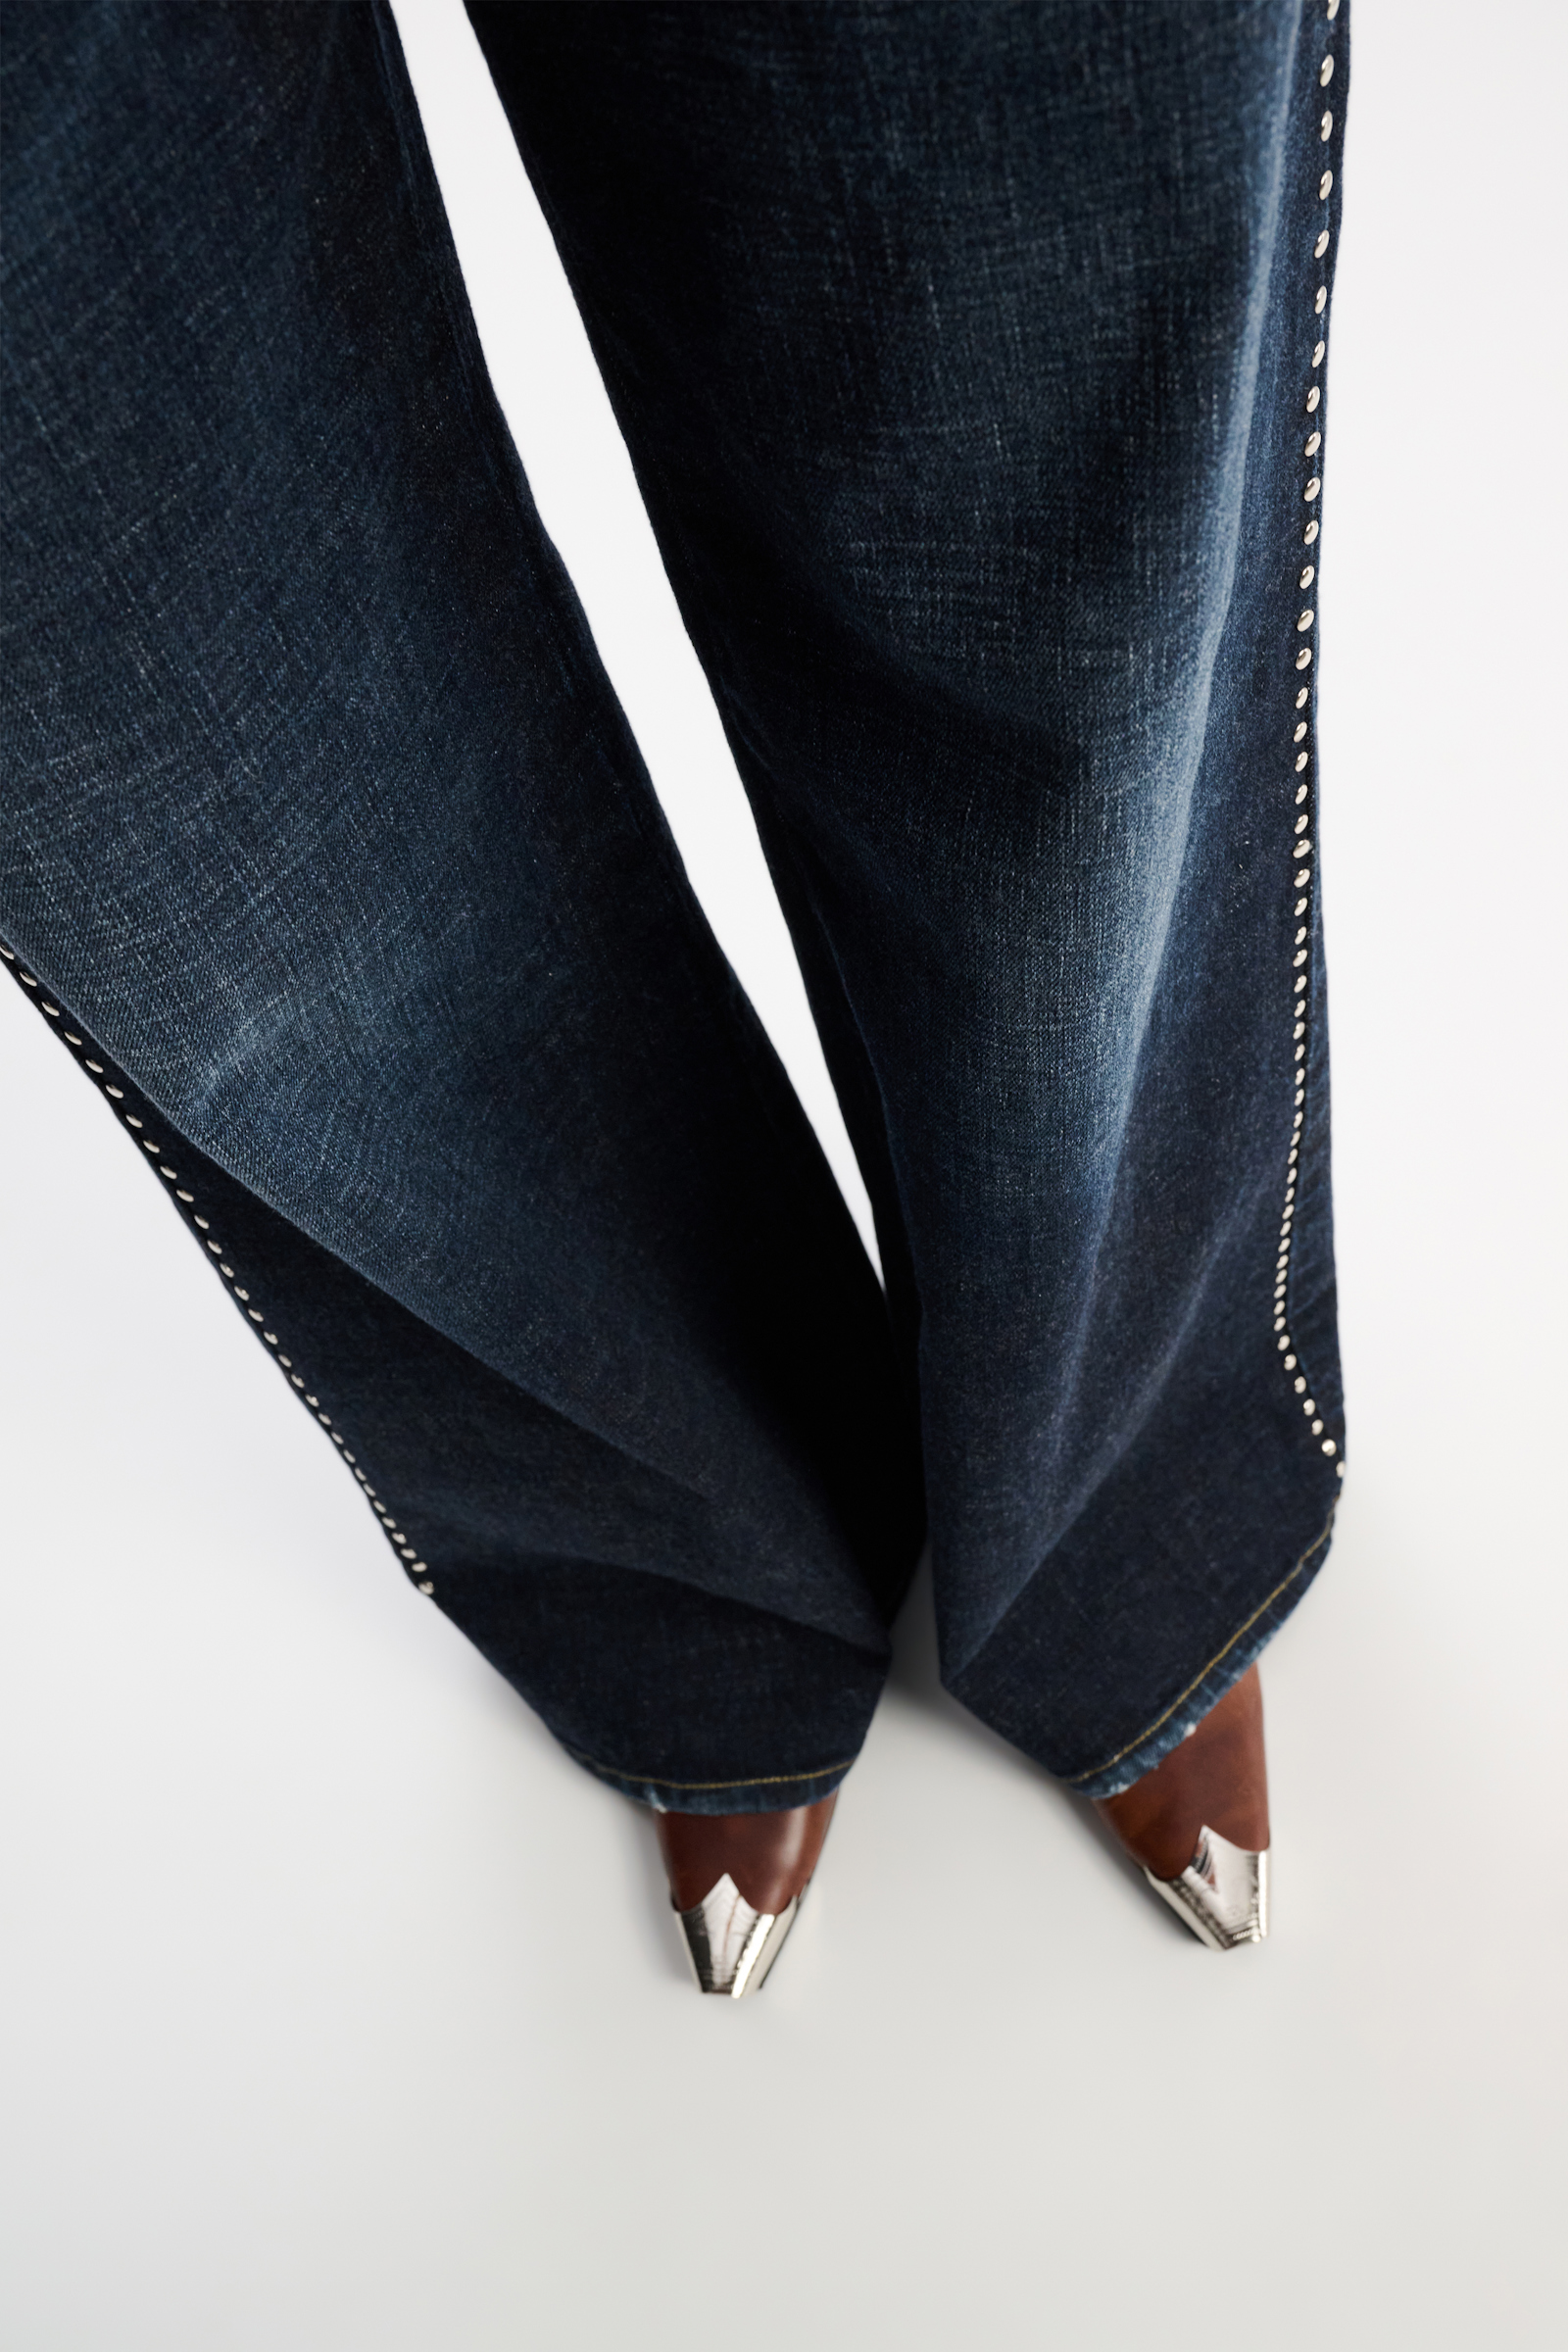 Dorothee Schumacher Studded wide leg jeans with frayed waistband true denim blue